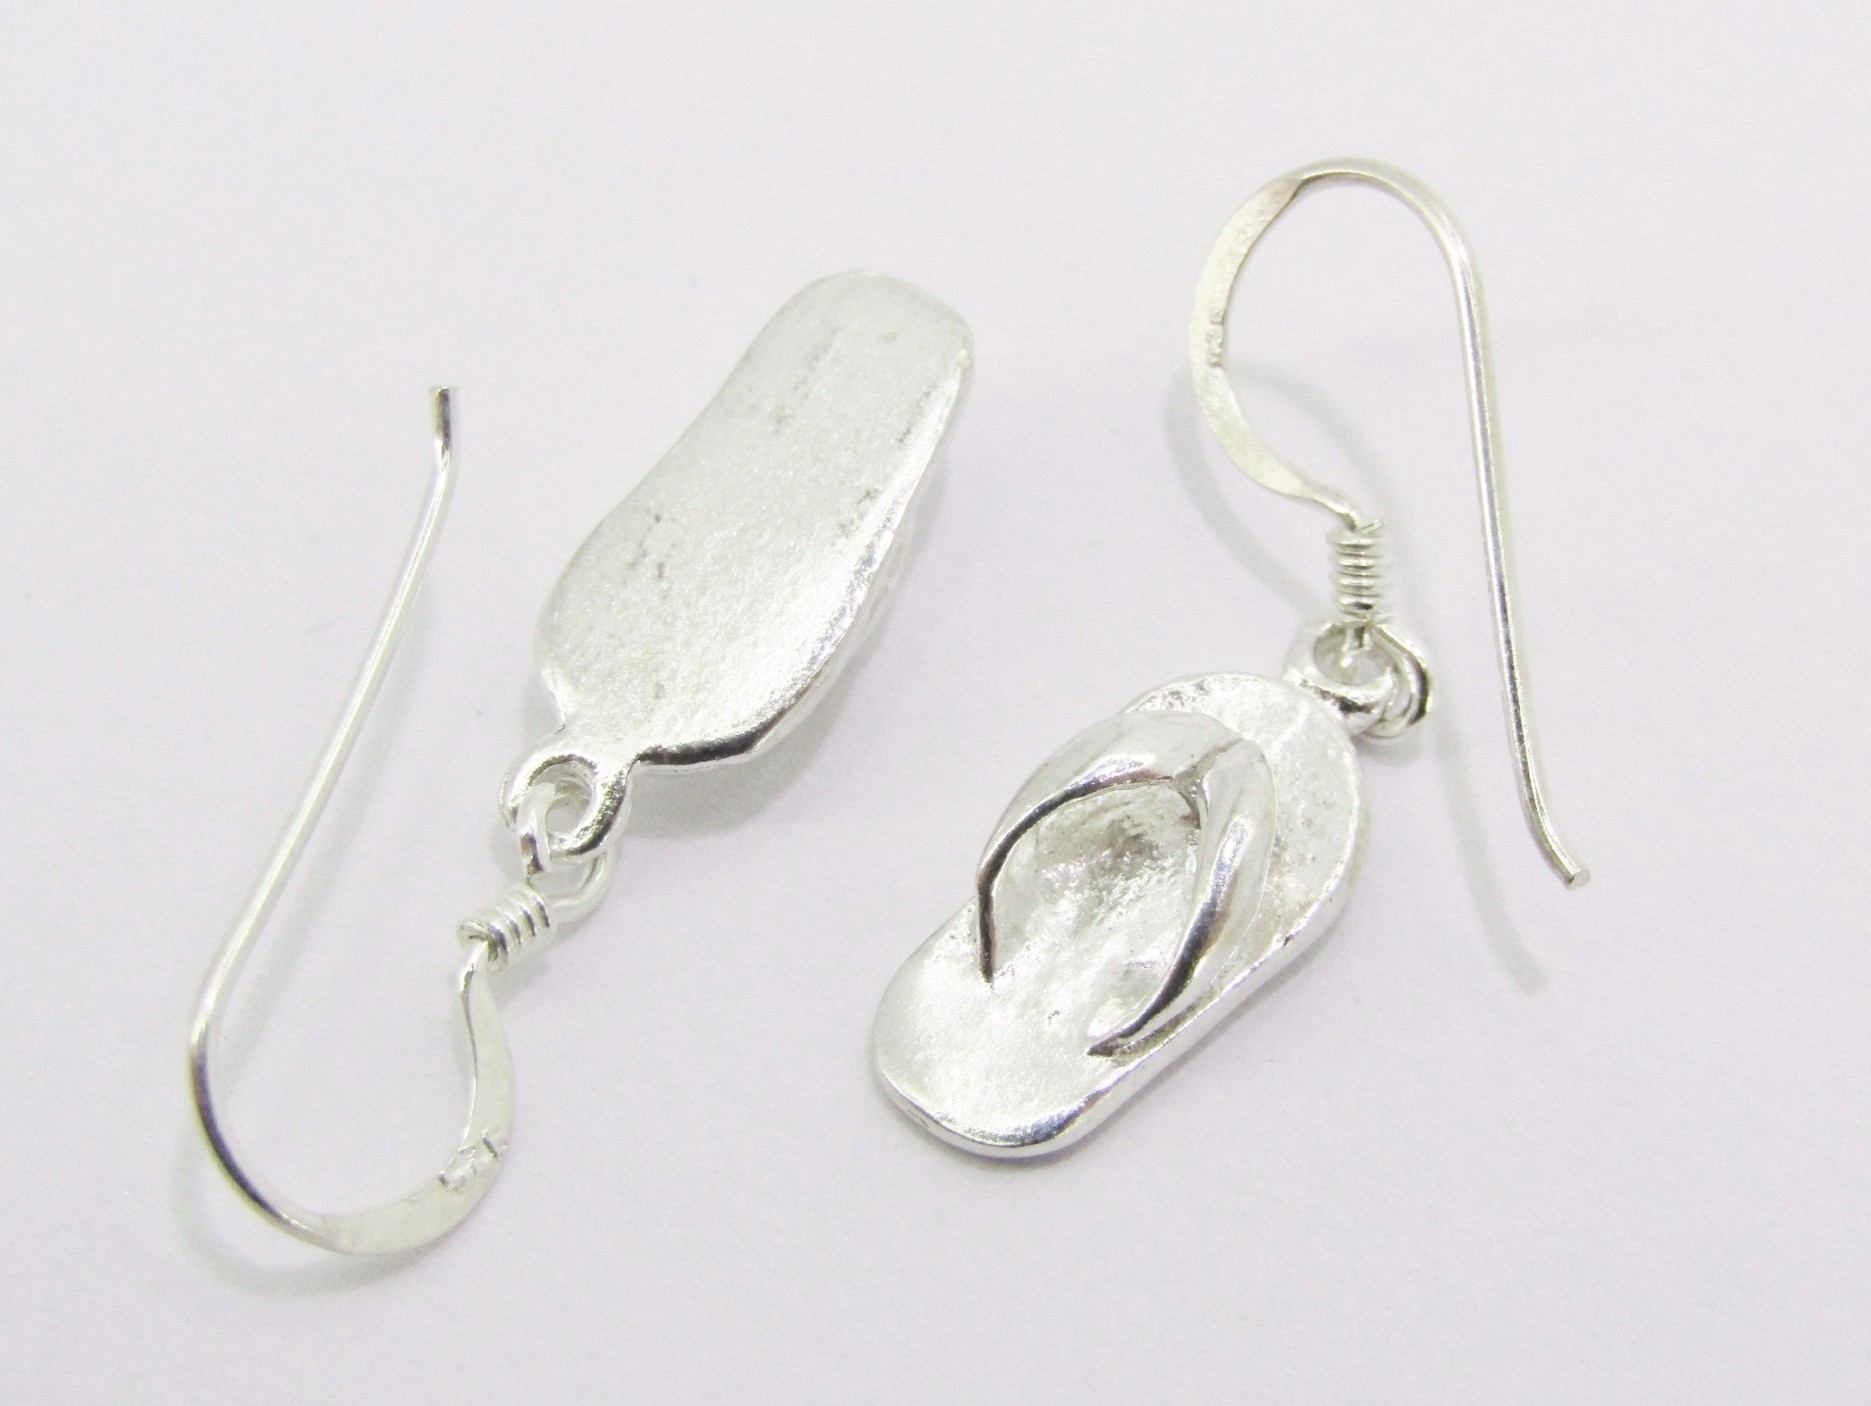 A Lovely Pair of Slip Slops Earrings in Sterling Silver.